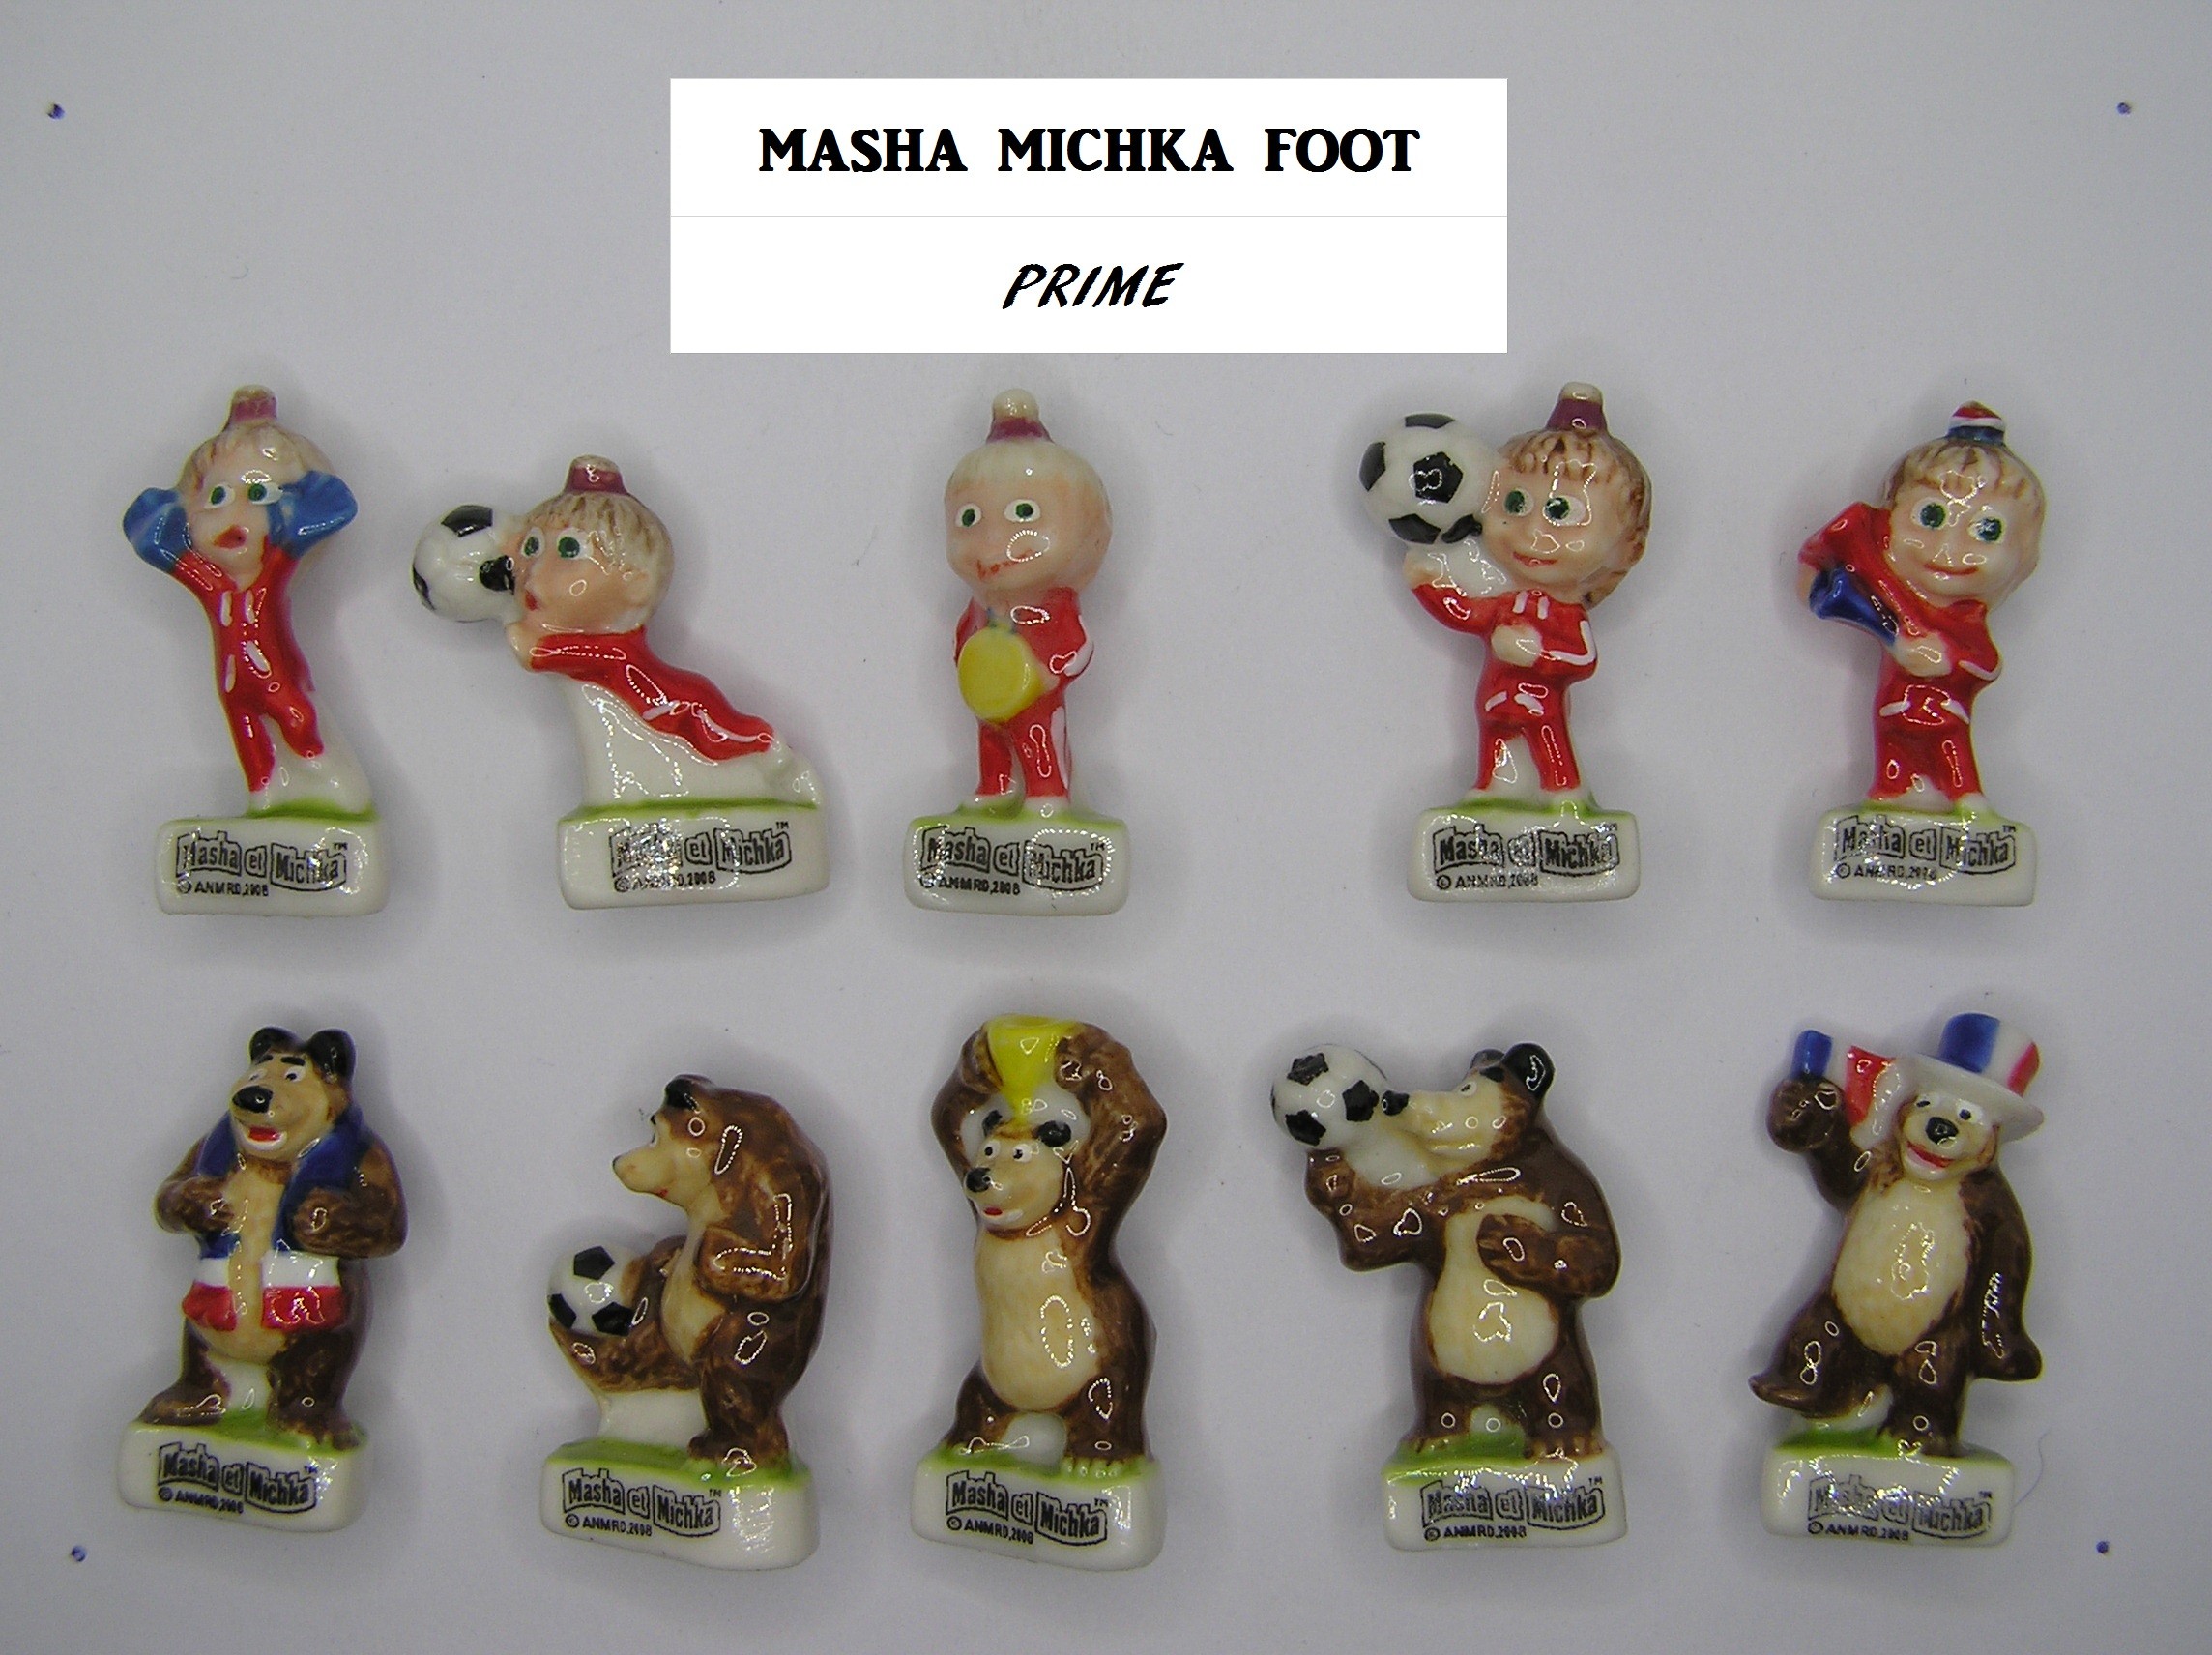 D 33 / MASHA MICHKA FOOT / 7 €uros / PRIME / AFF 78.2020